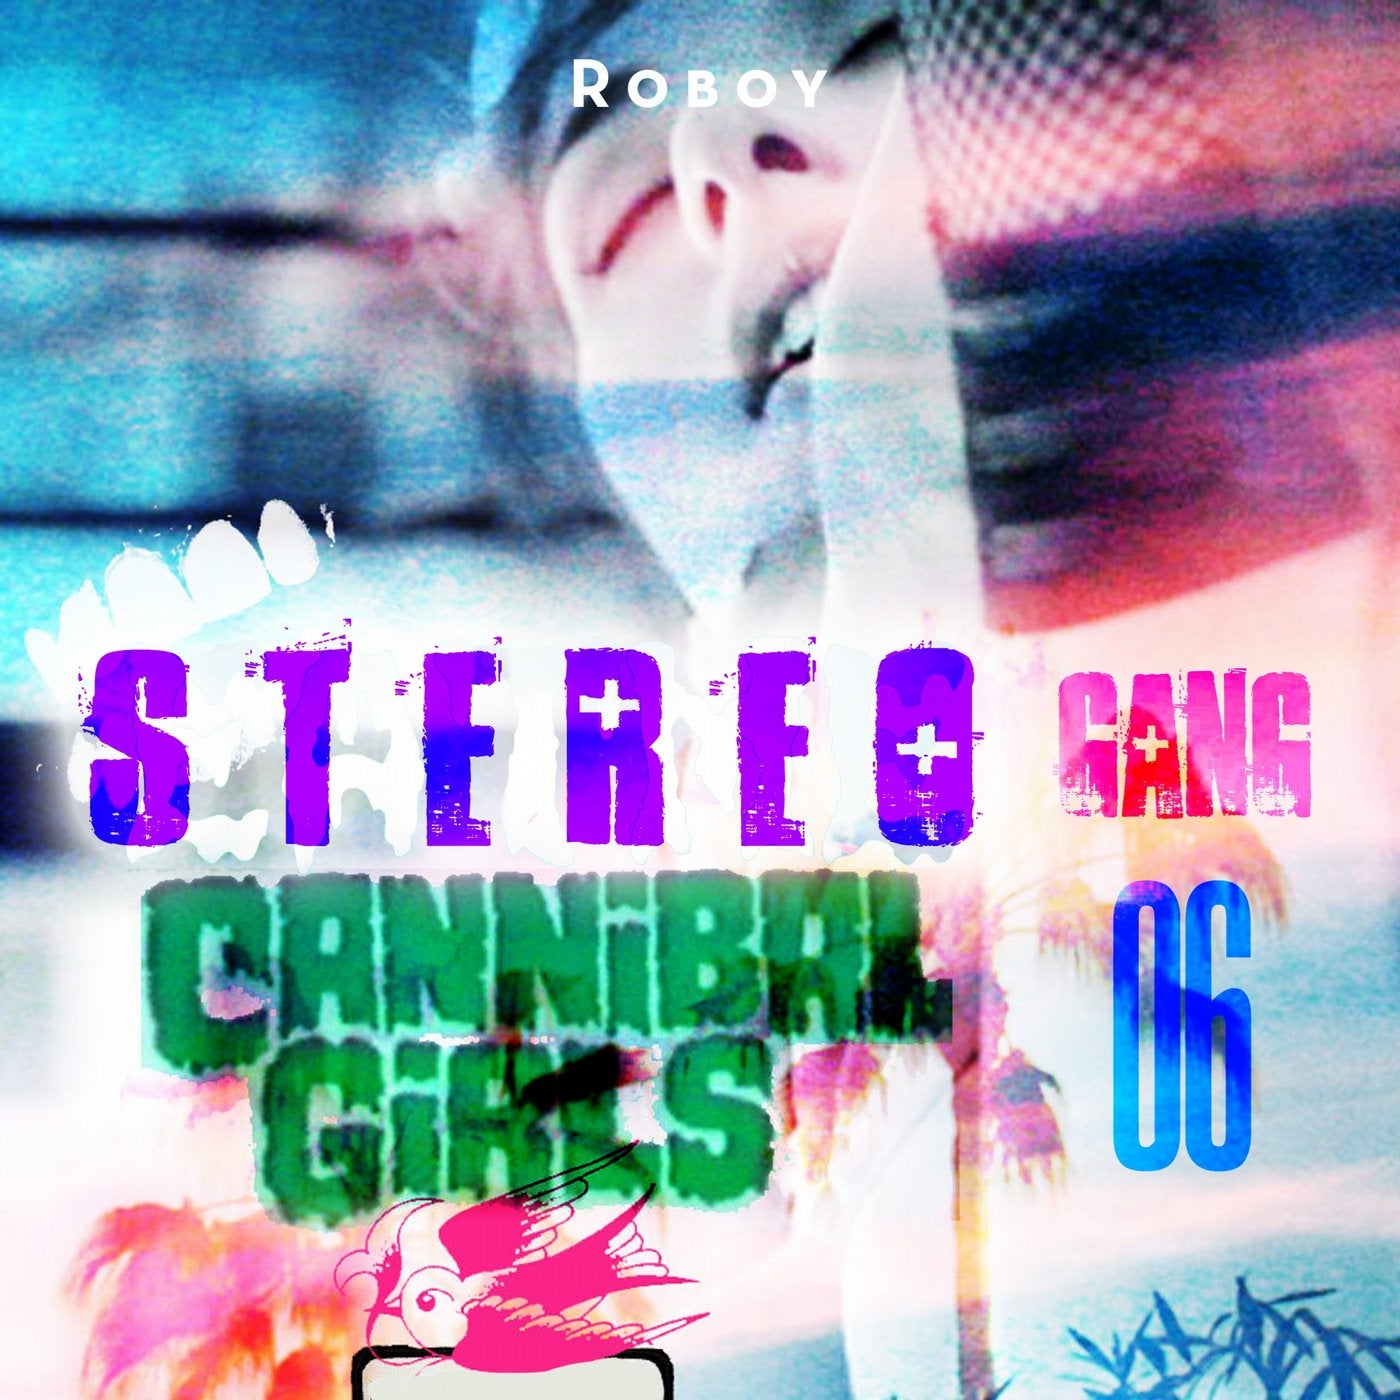 Stereo Gang 06 (Cannibal Girls)